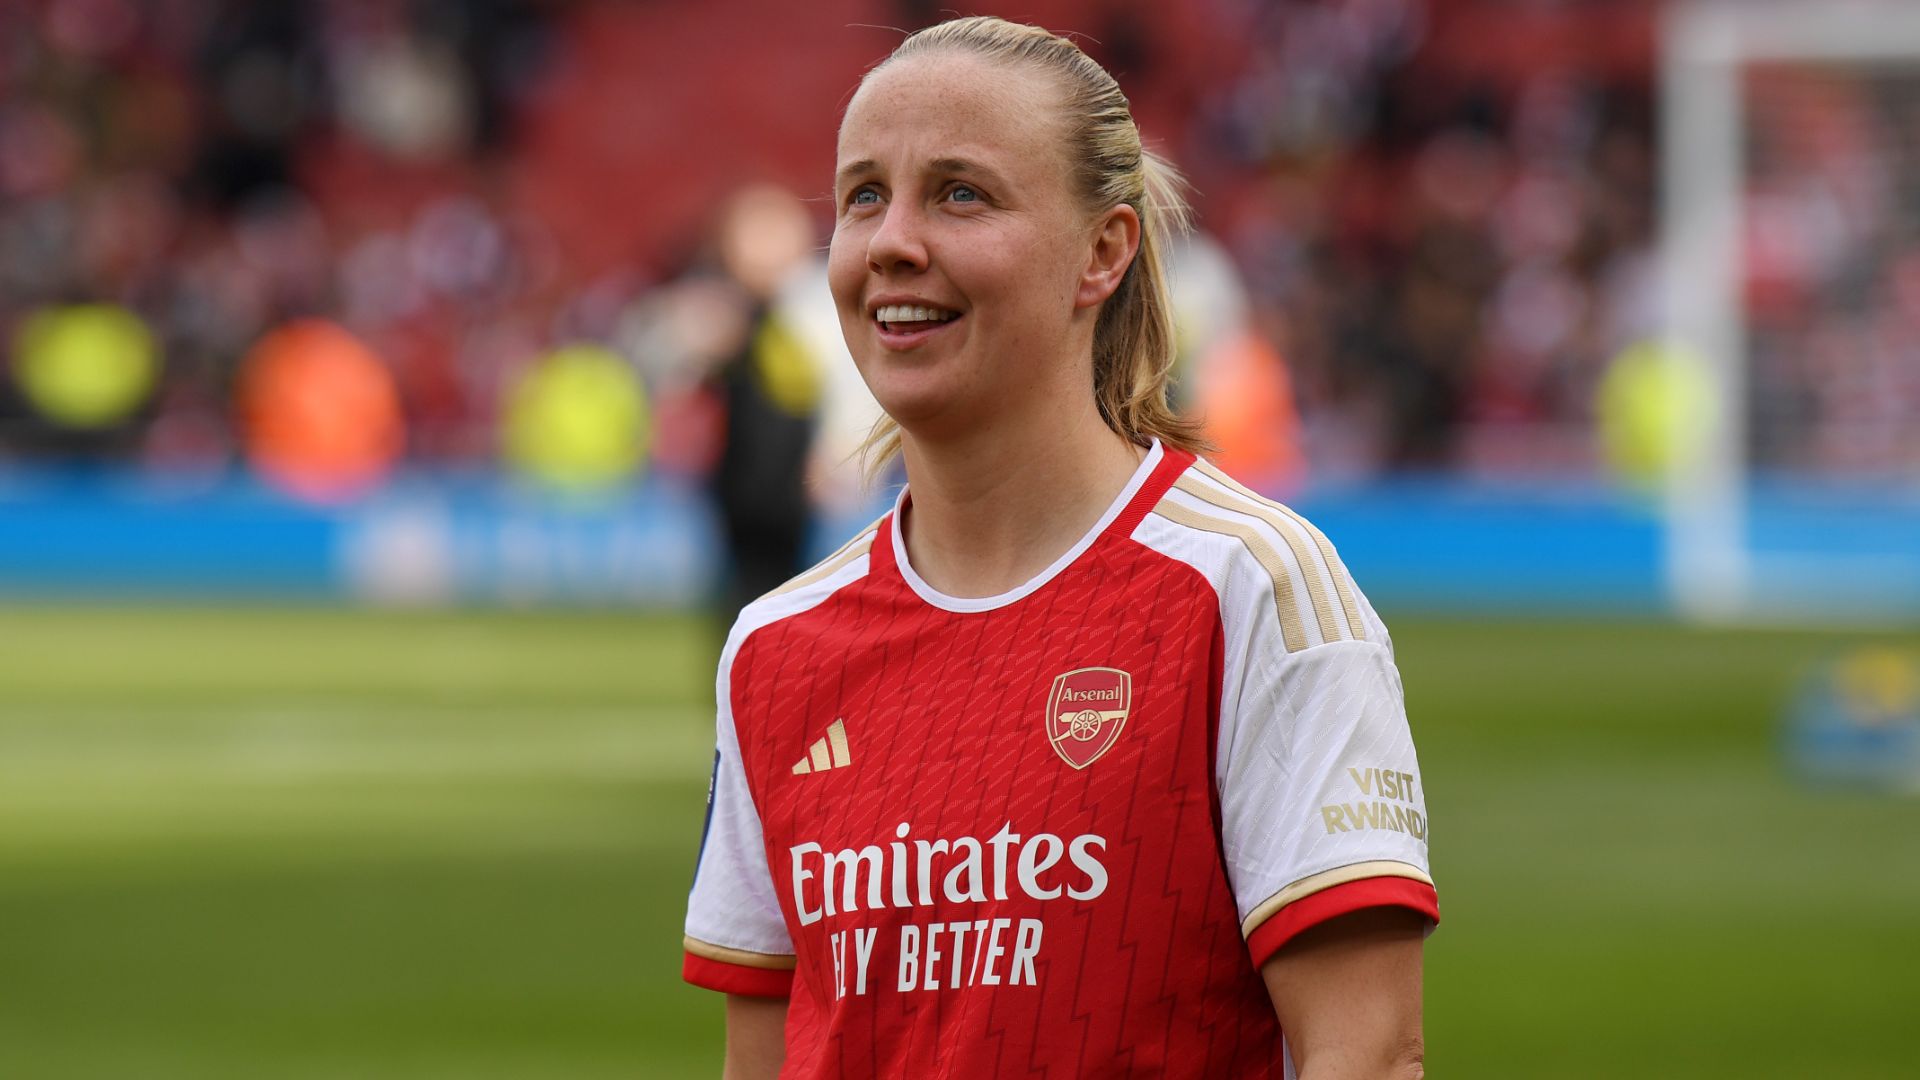 Emirates to host Arsenal Women